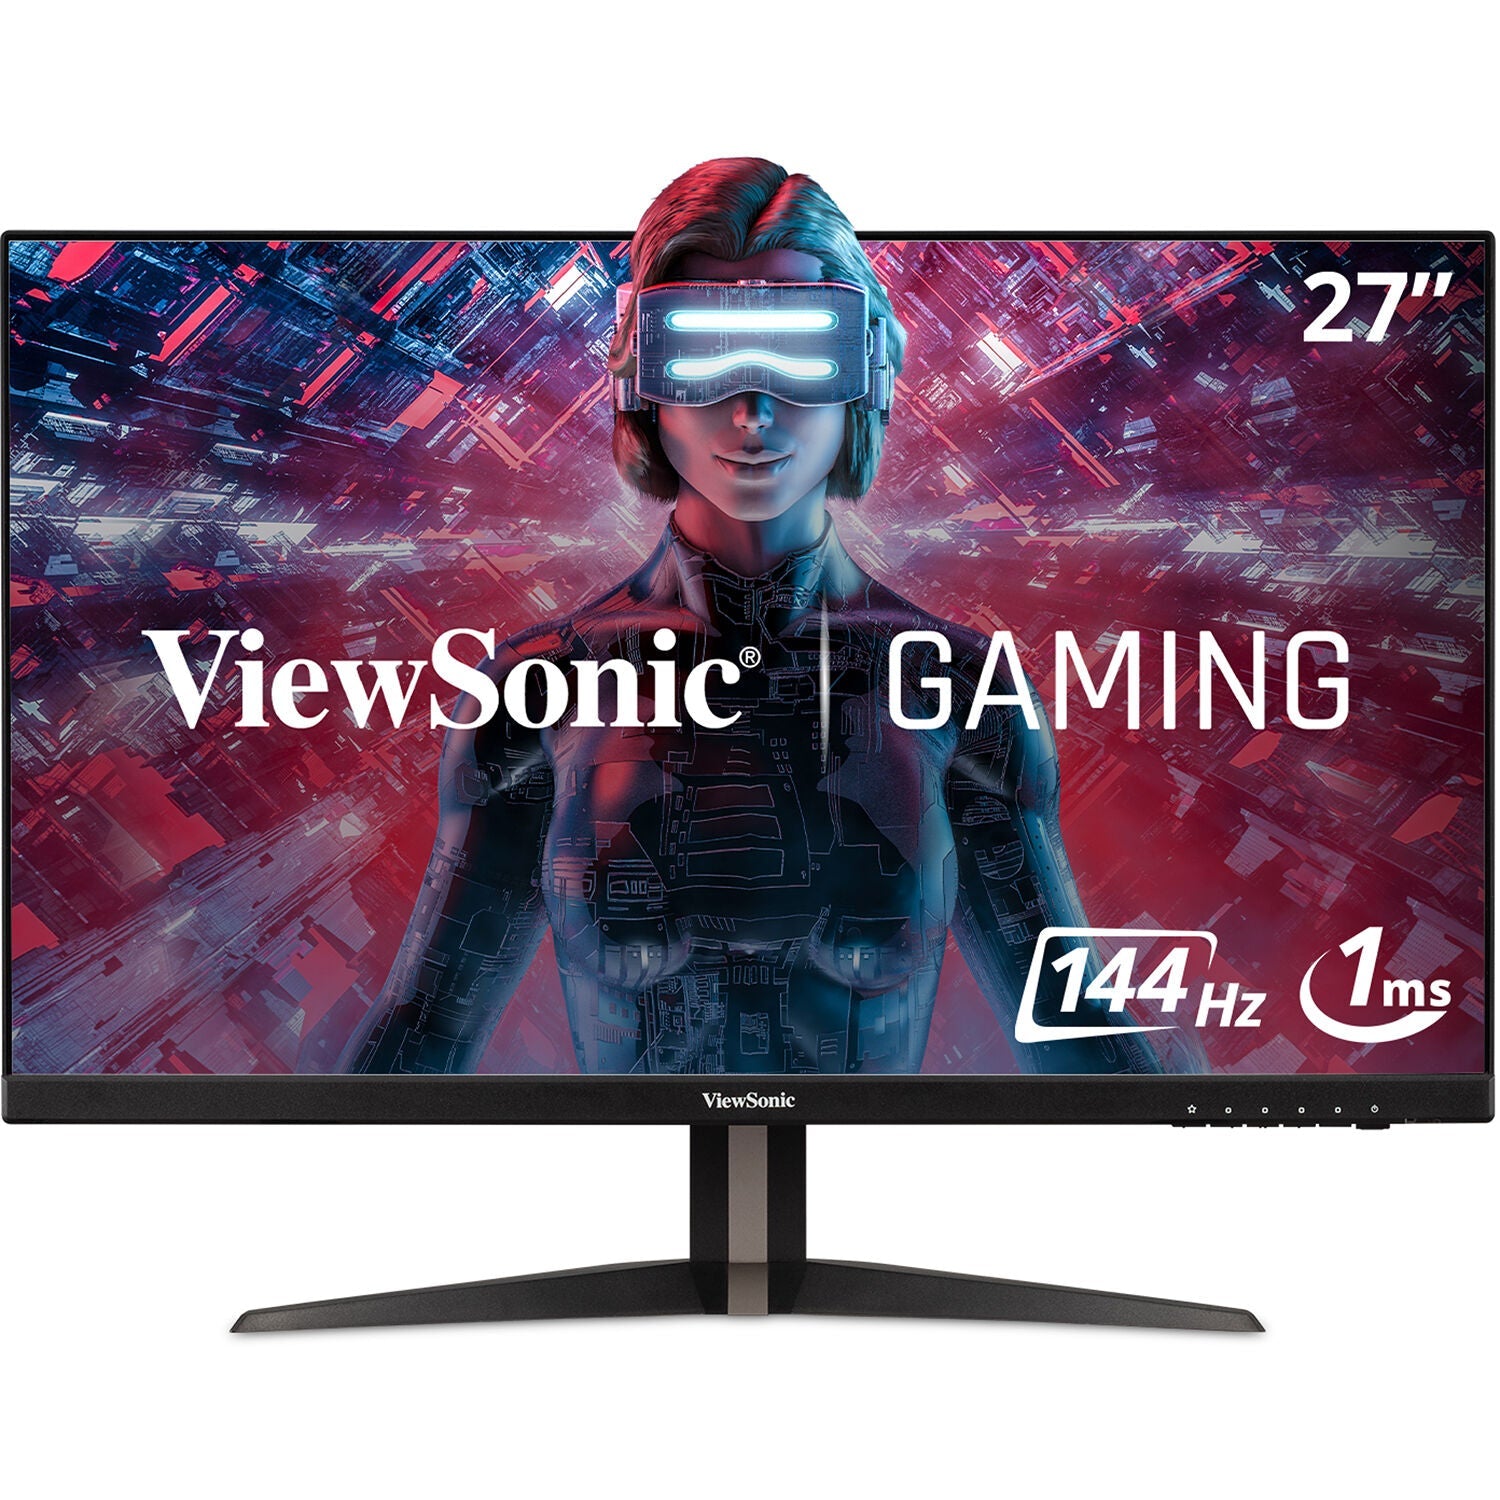 ViewSonic VX2768-2KP-MHD-R 27" OMNI 1440p 1ms 144Hz IPS Gaming Monitor - C Grade Refurbished